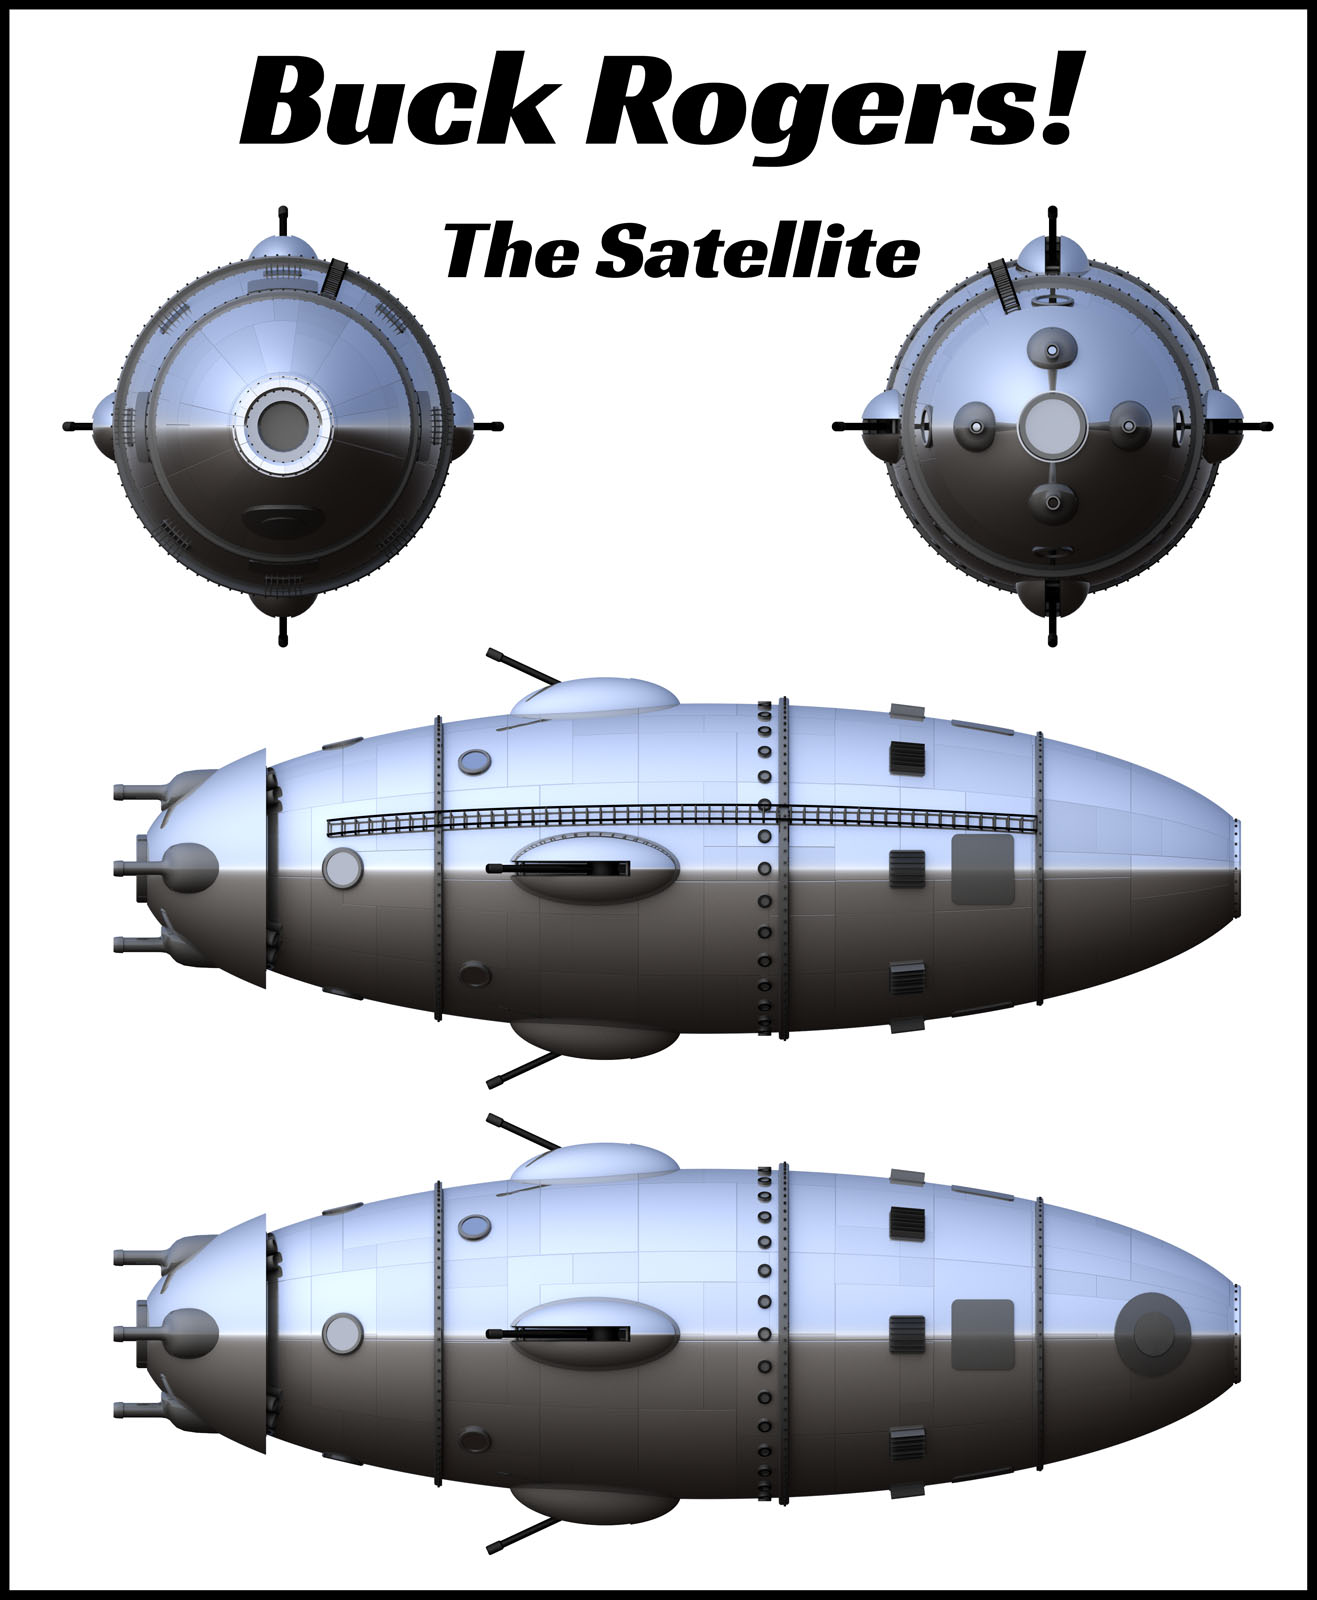 The Satellite, Buck Rogers Rocket